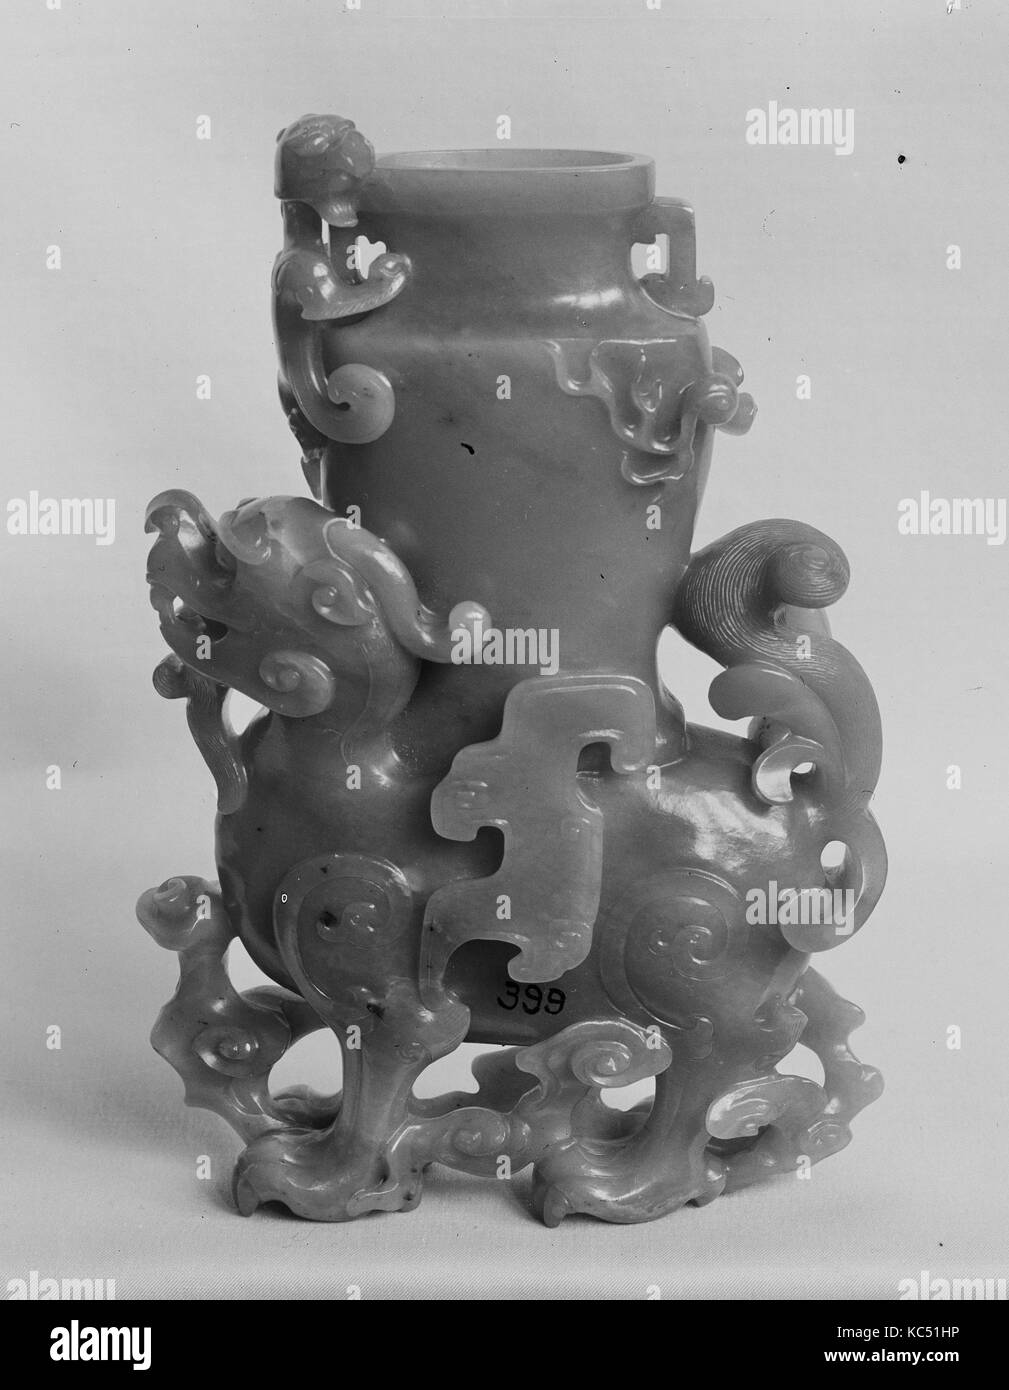 清中期 玉雕瑞獸瓶, creatura fantastica di supporto di un vaso, XVIII secolo Foto Stock